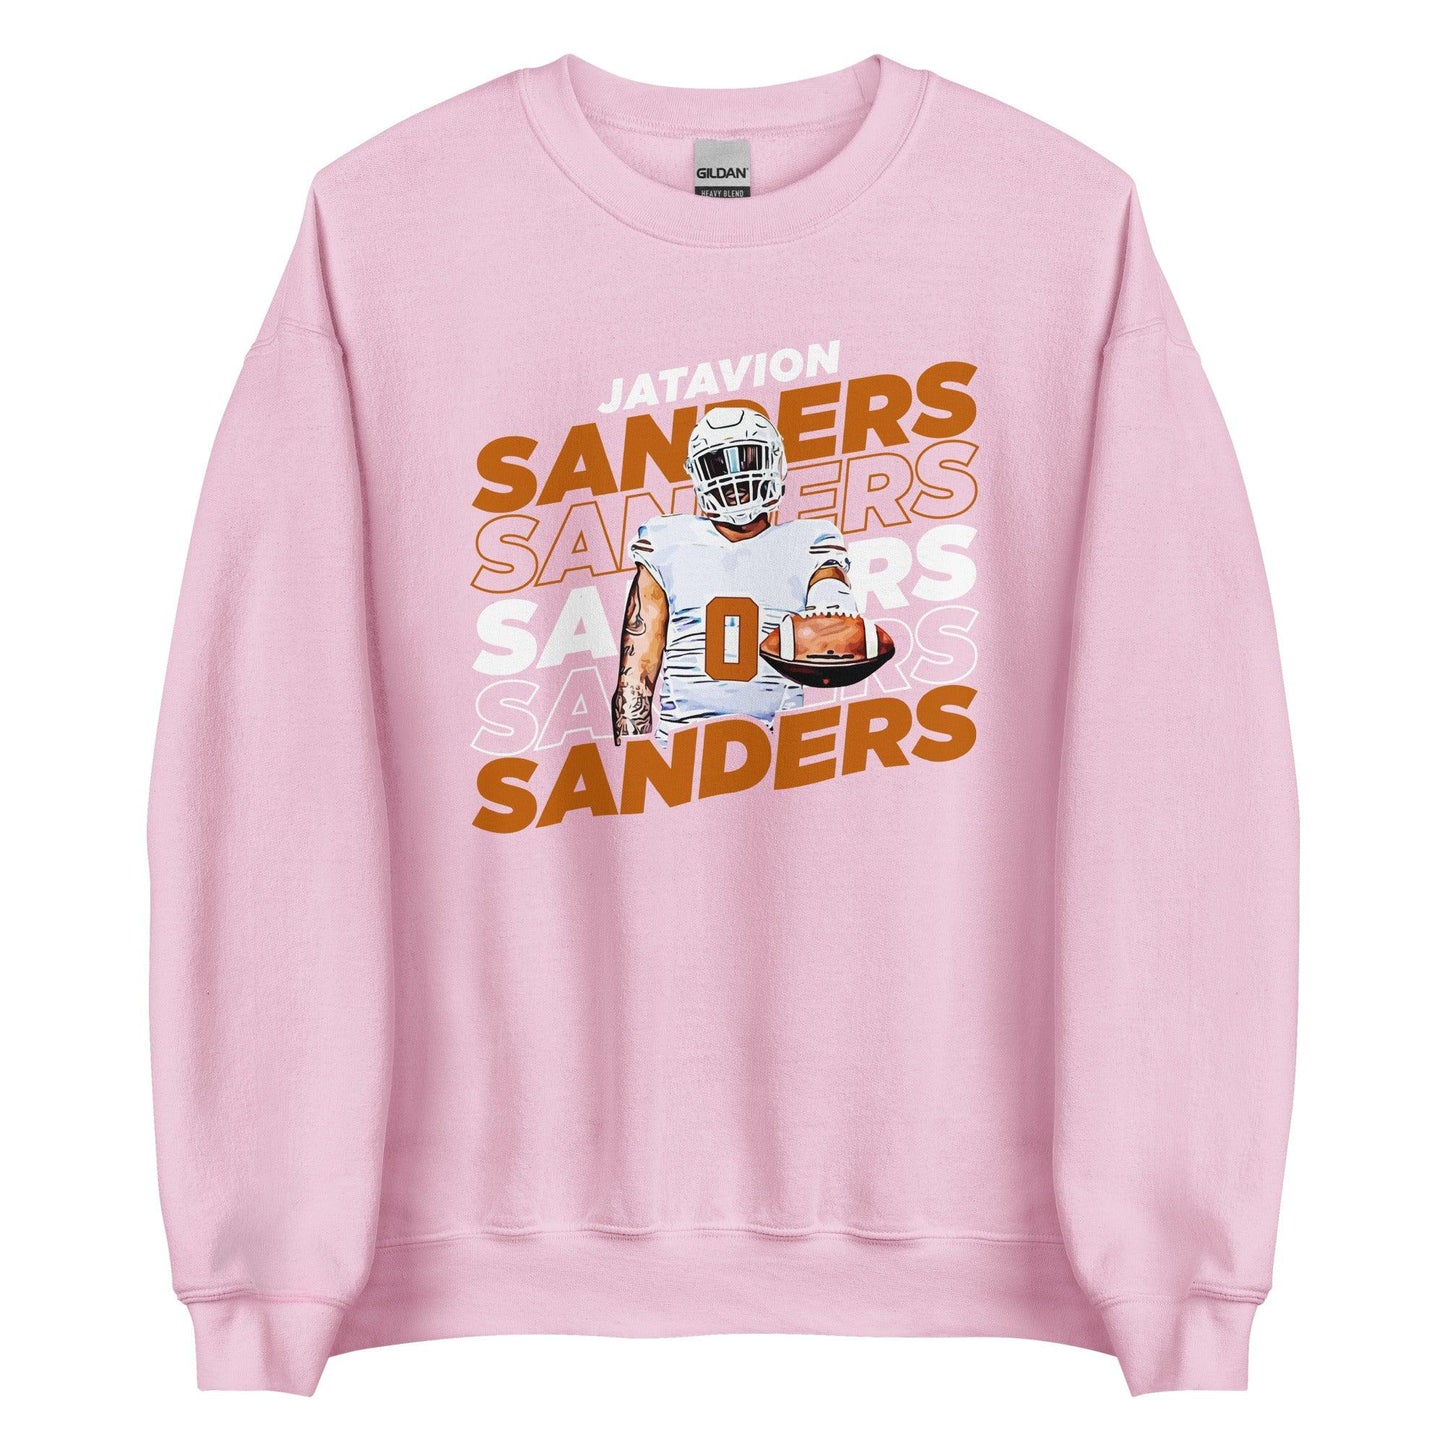 Jatavion Sanders "Repeat" Sweatshirt - Fan Arch